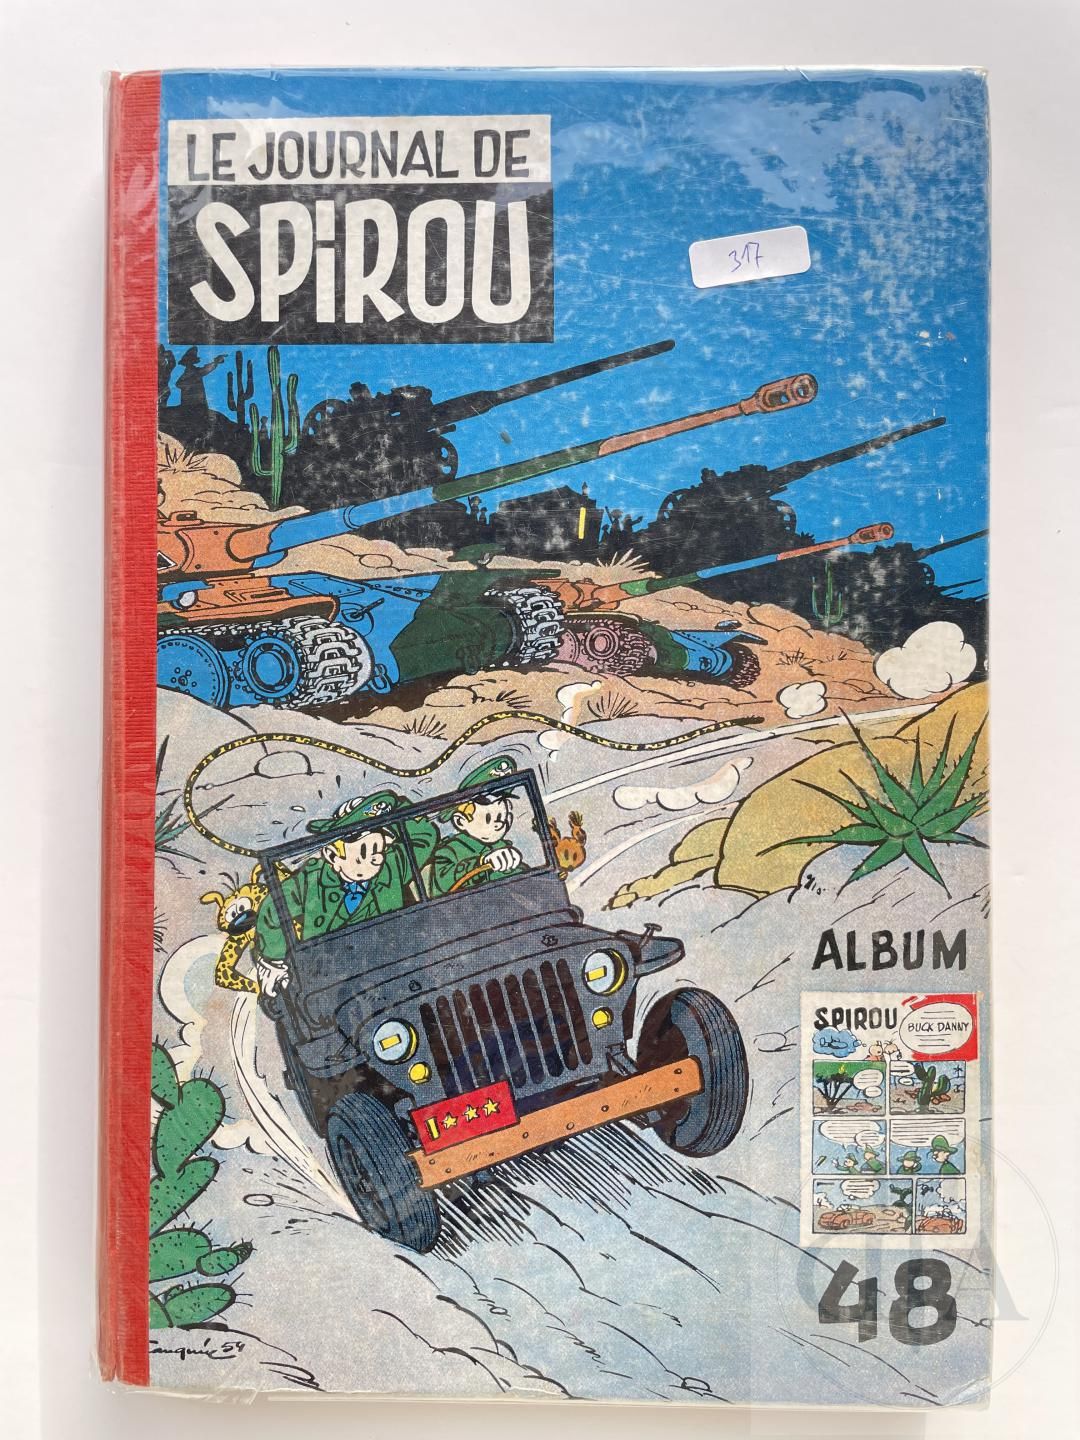 Null Le journal de Spirou/Reliure editeur n°48 de 1954. Completo en buen estado.